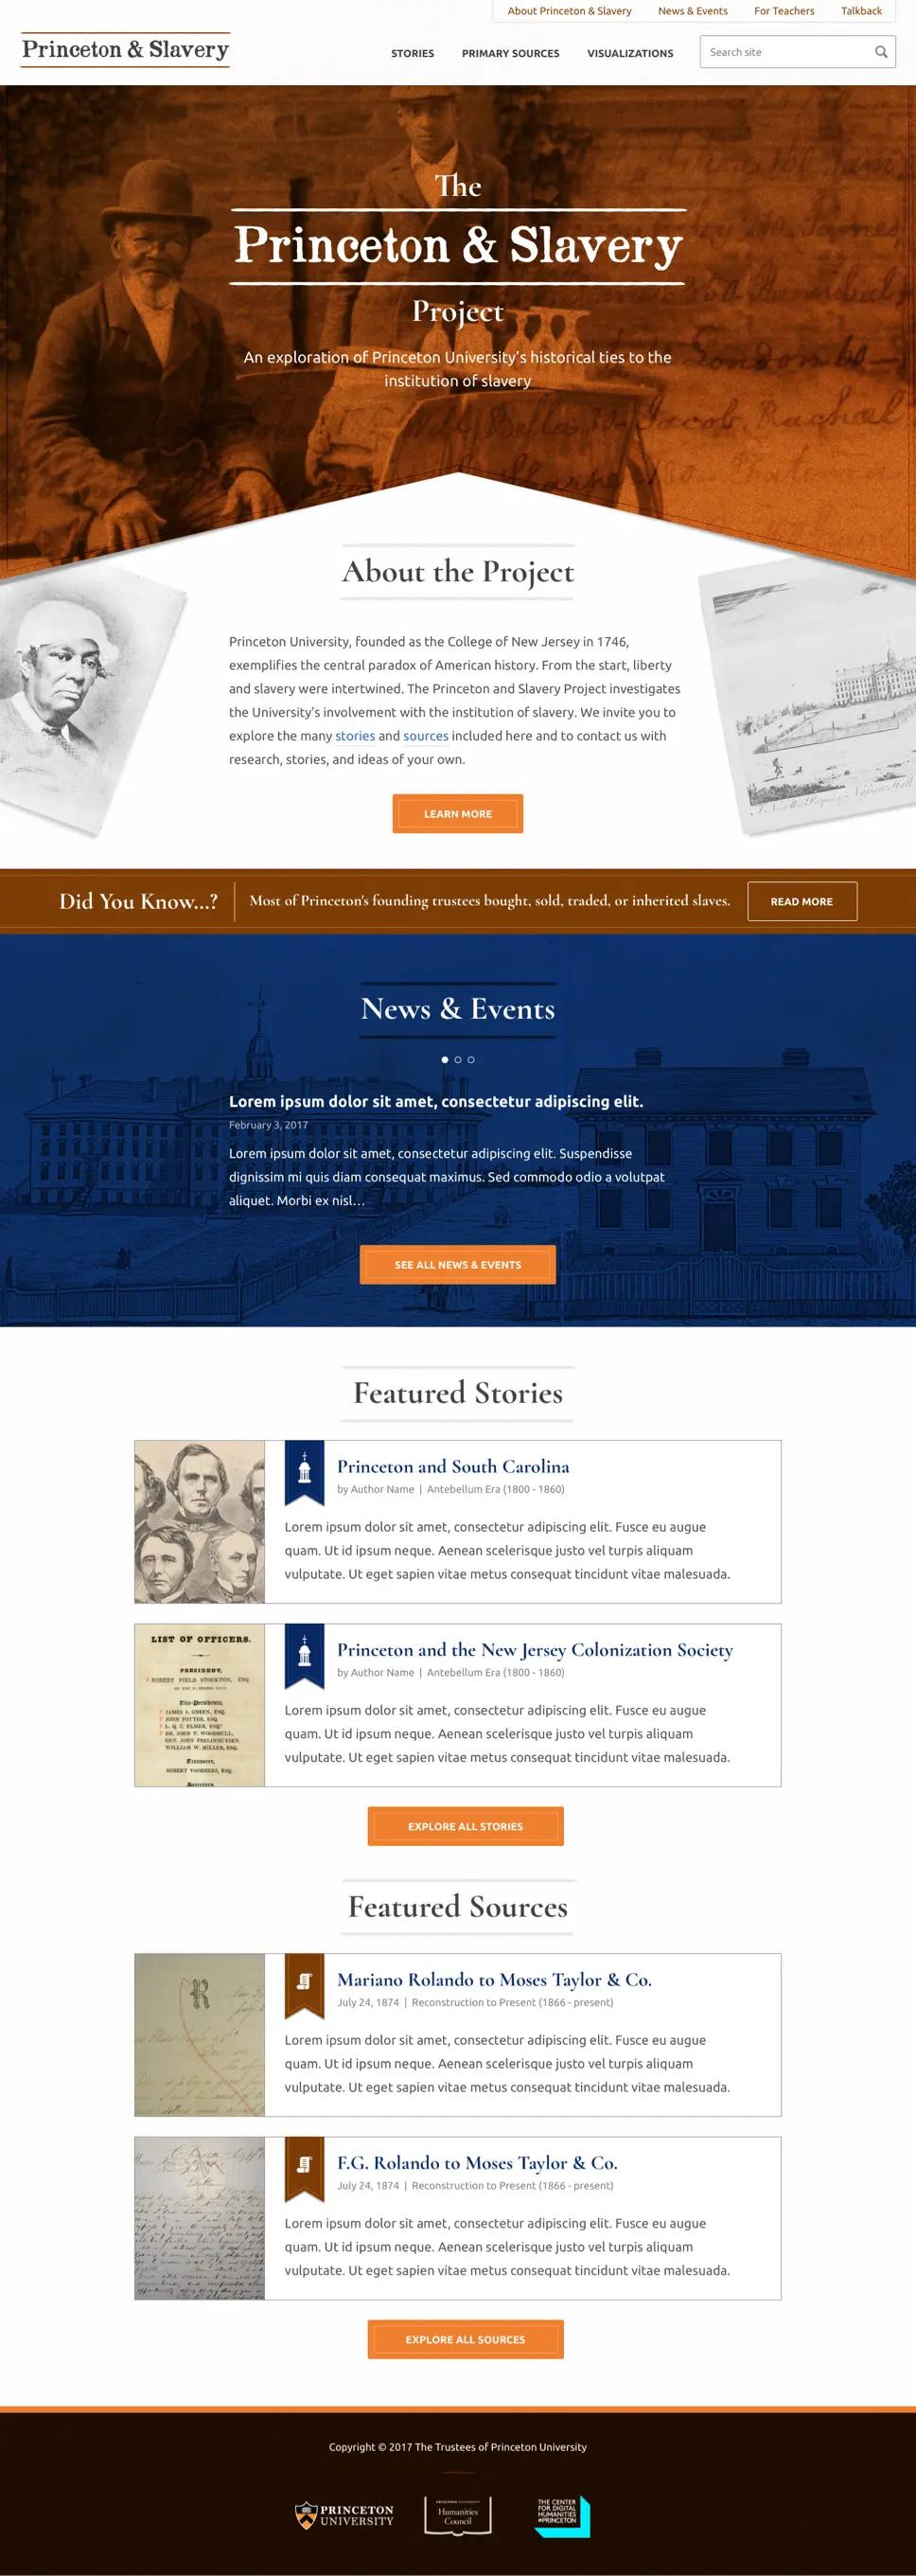 A screenshot of Princeton & Slavery's homepage.